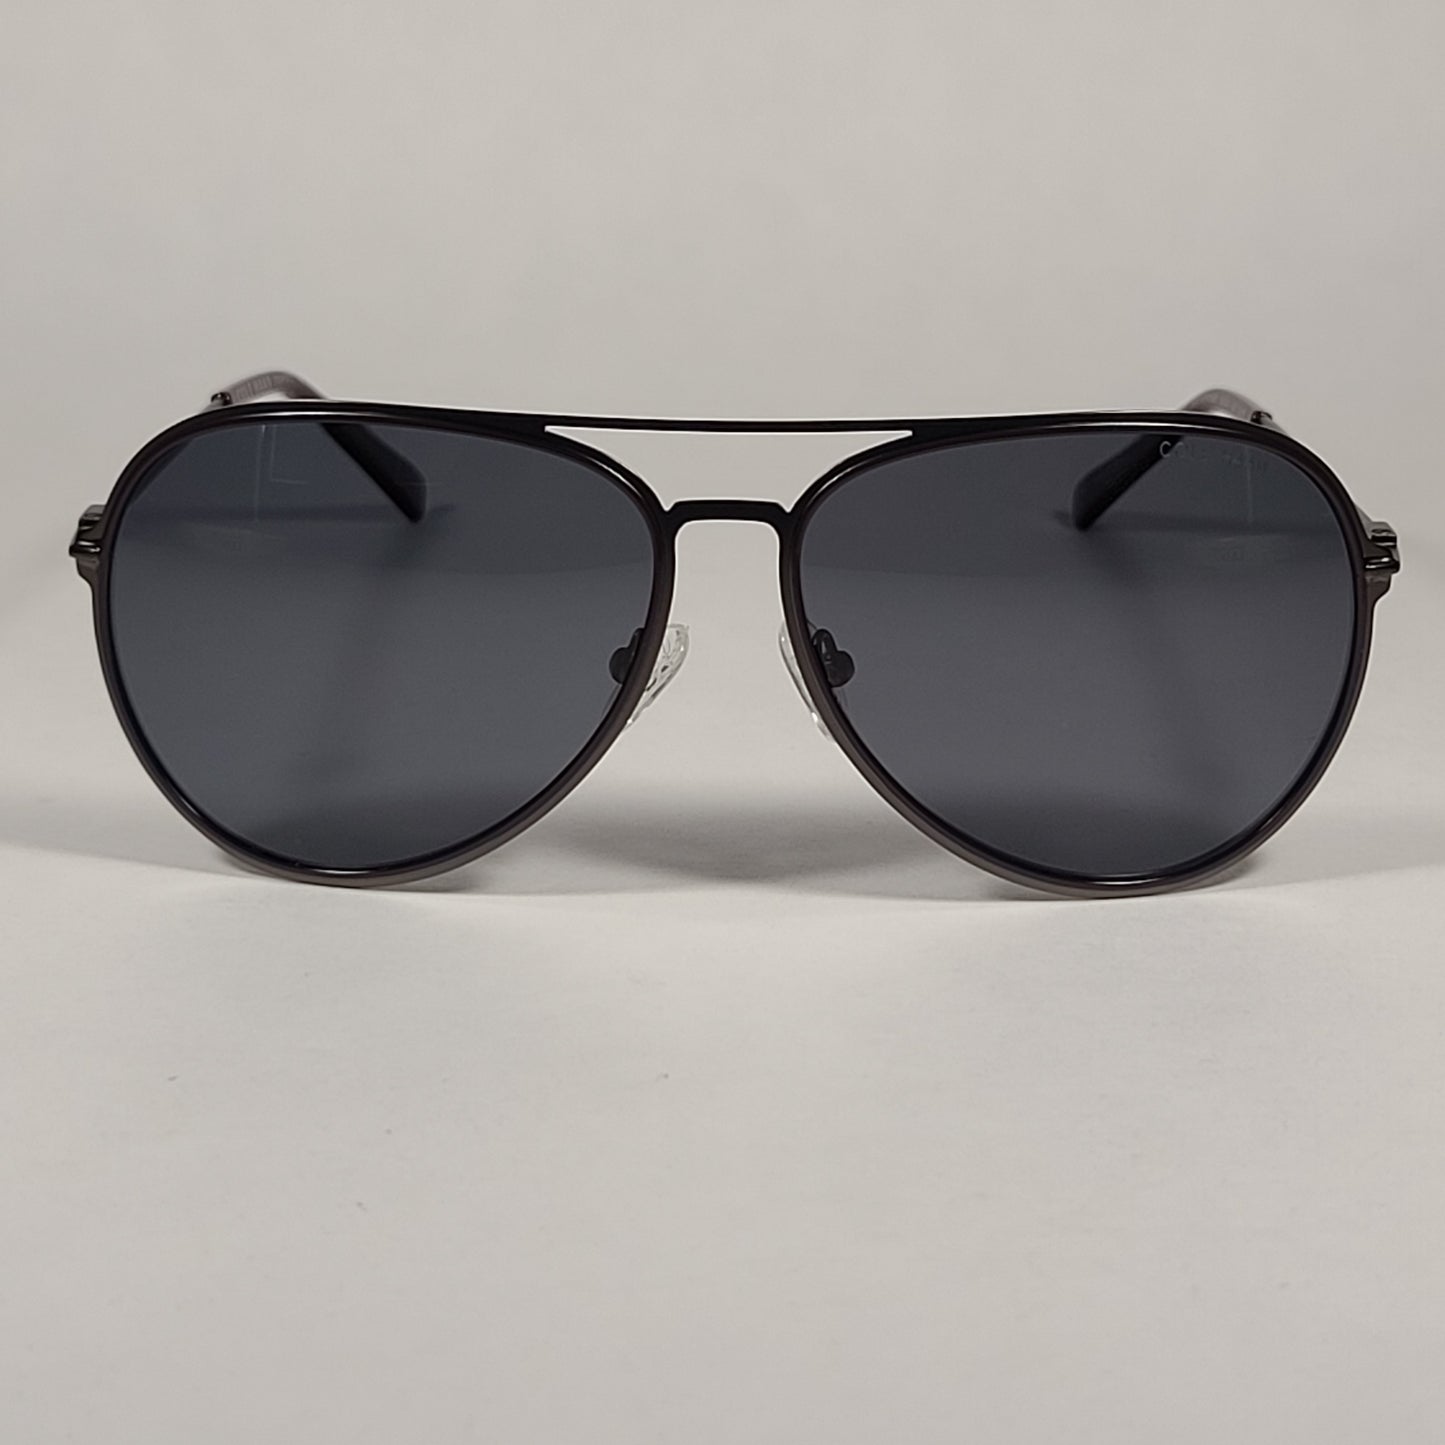 Cole Haan Polarized Aviator Sunglasses Gunmetal And Burgundy Frame Gray Lens CH8007 604 Burgundy - Sunglasses